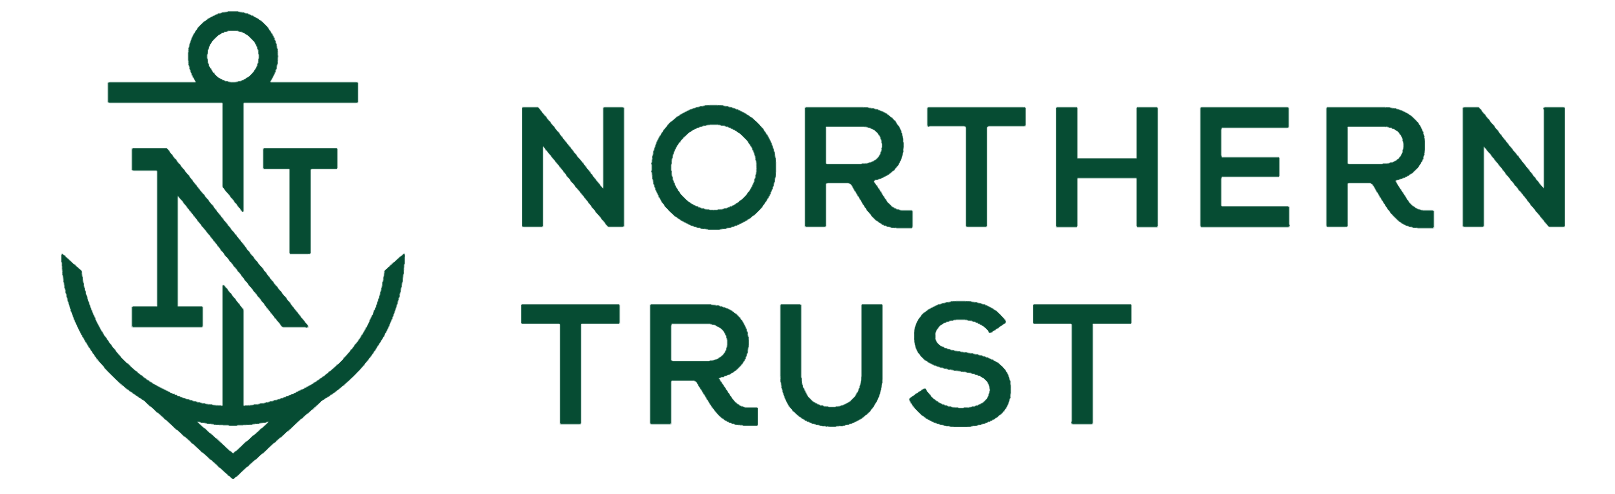 Northern Trust logo, logotype